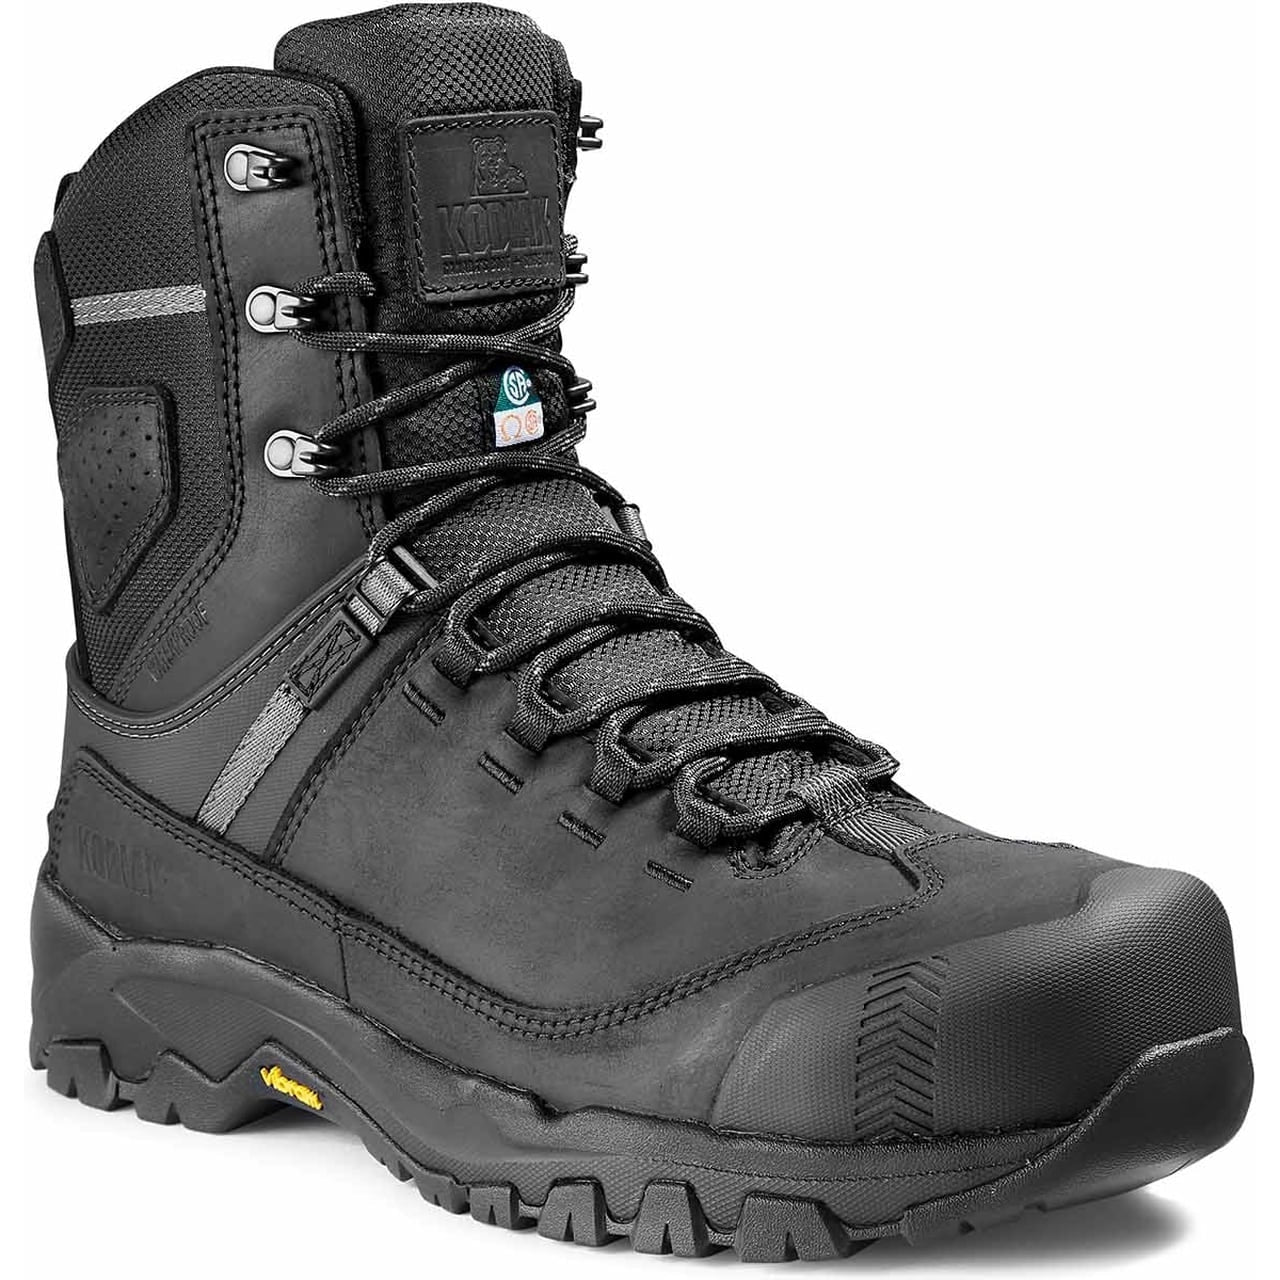 Kodiak Men's Quest Bound 8" Comp Toe WP Safety Work Boot -Black- 4THHBK 7 / Wide / Black - Overlook Boots